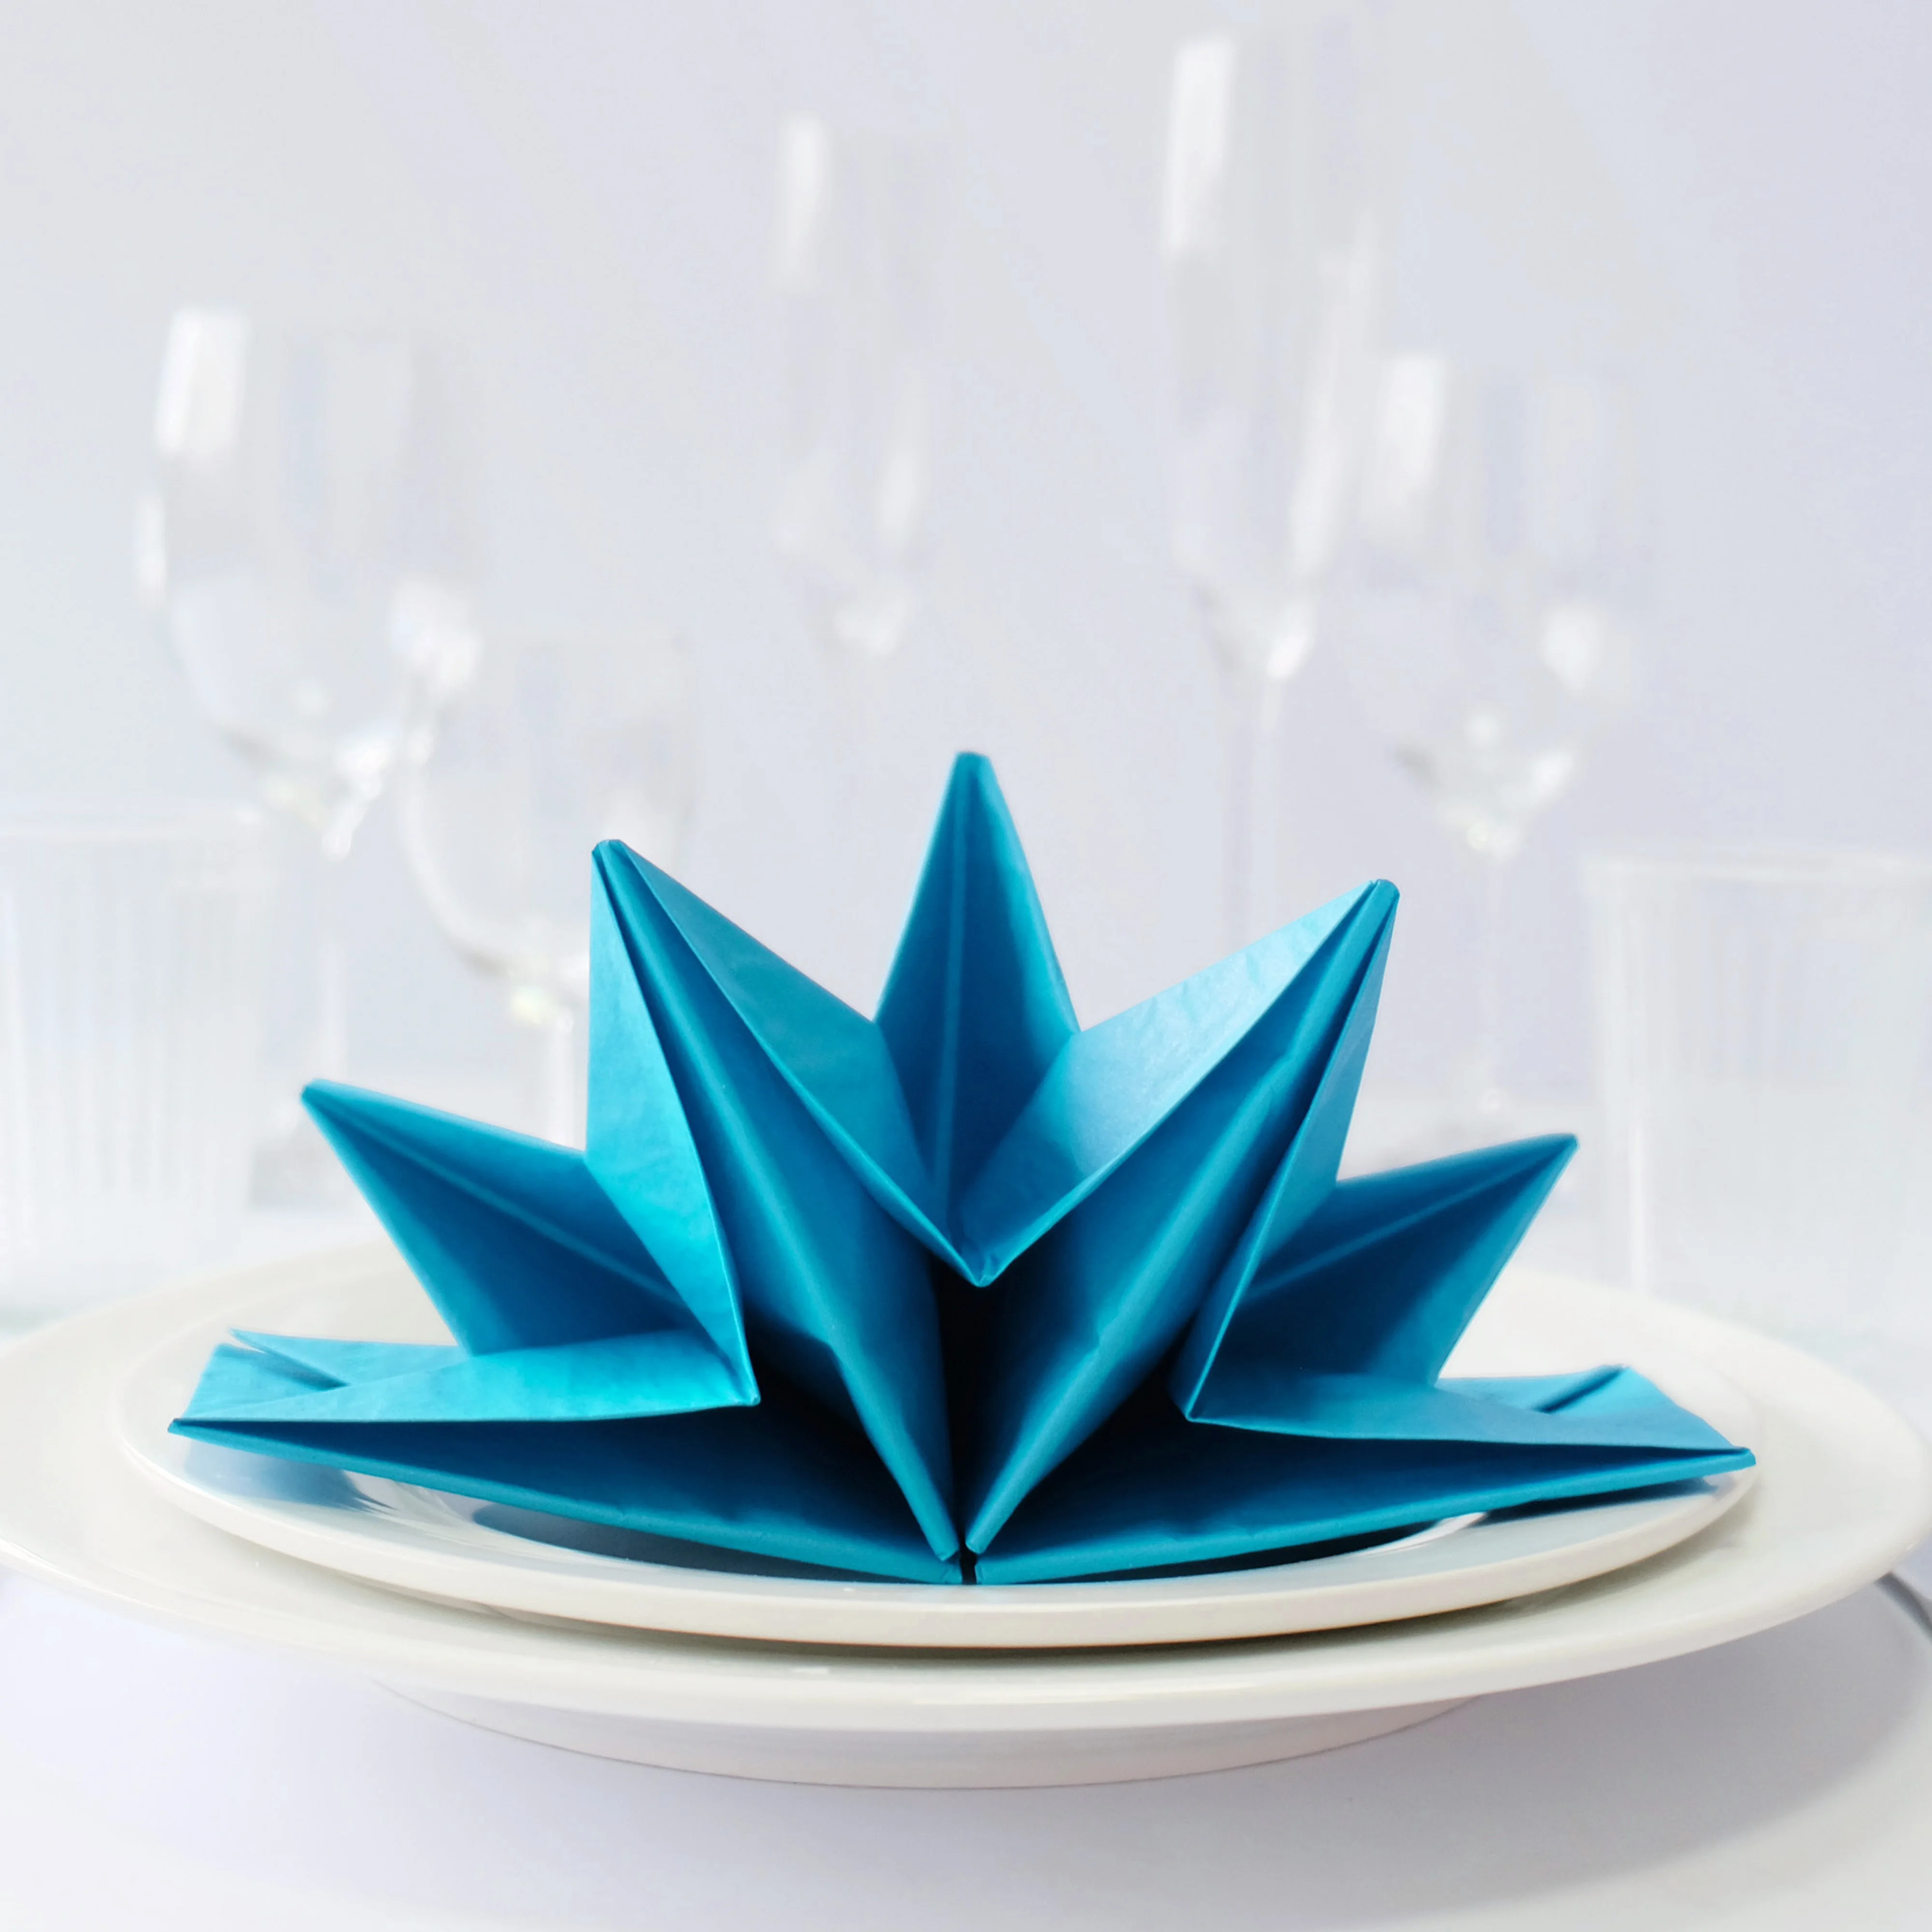 
Elegant Folded Table Paper Napkin For Wedding Party 